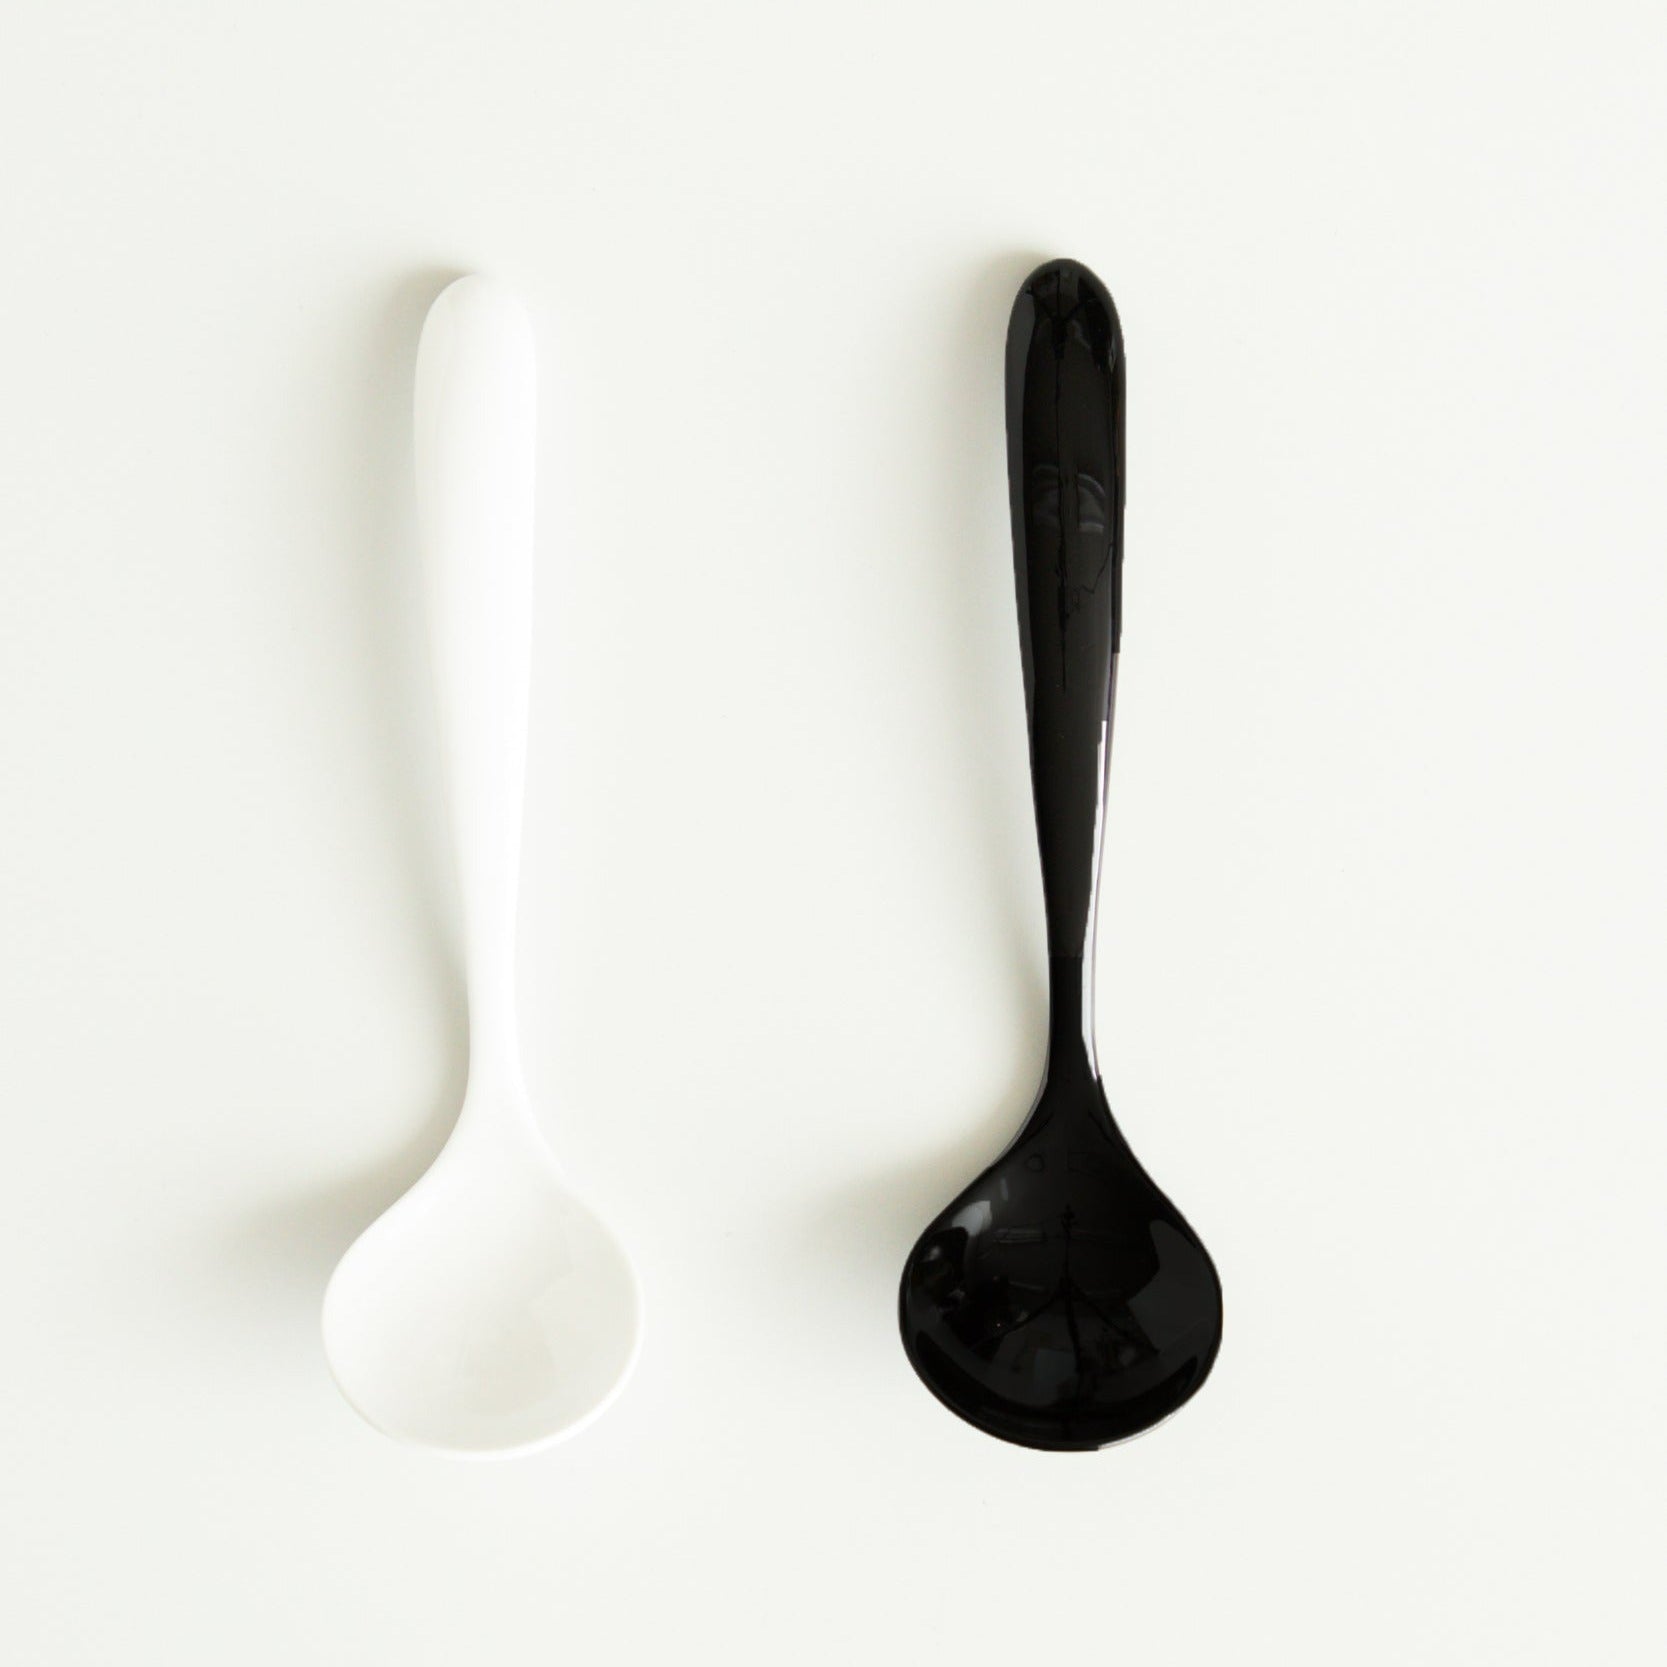 Cupping Spoon – ORIGAMI EC site